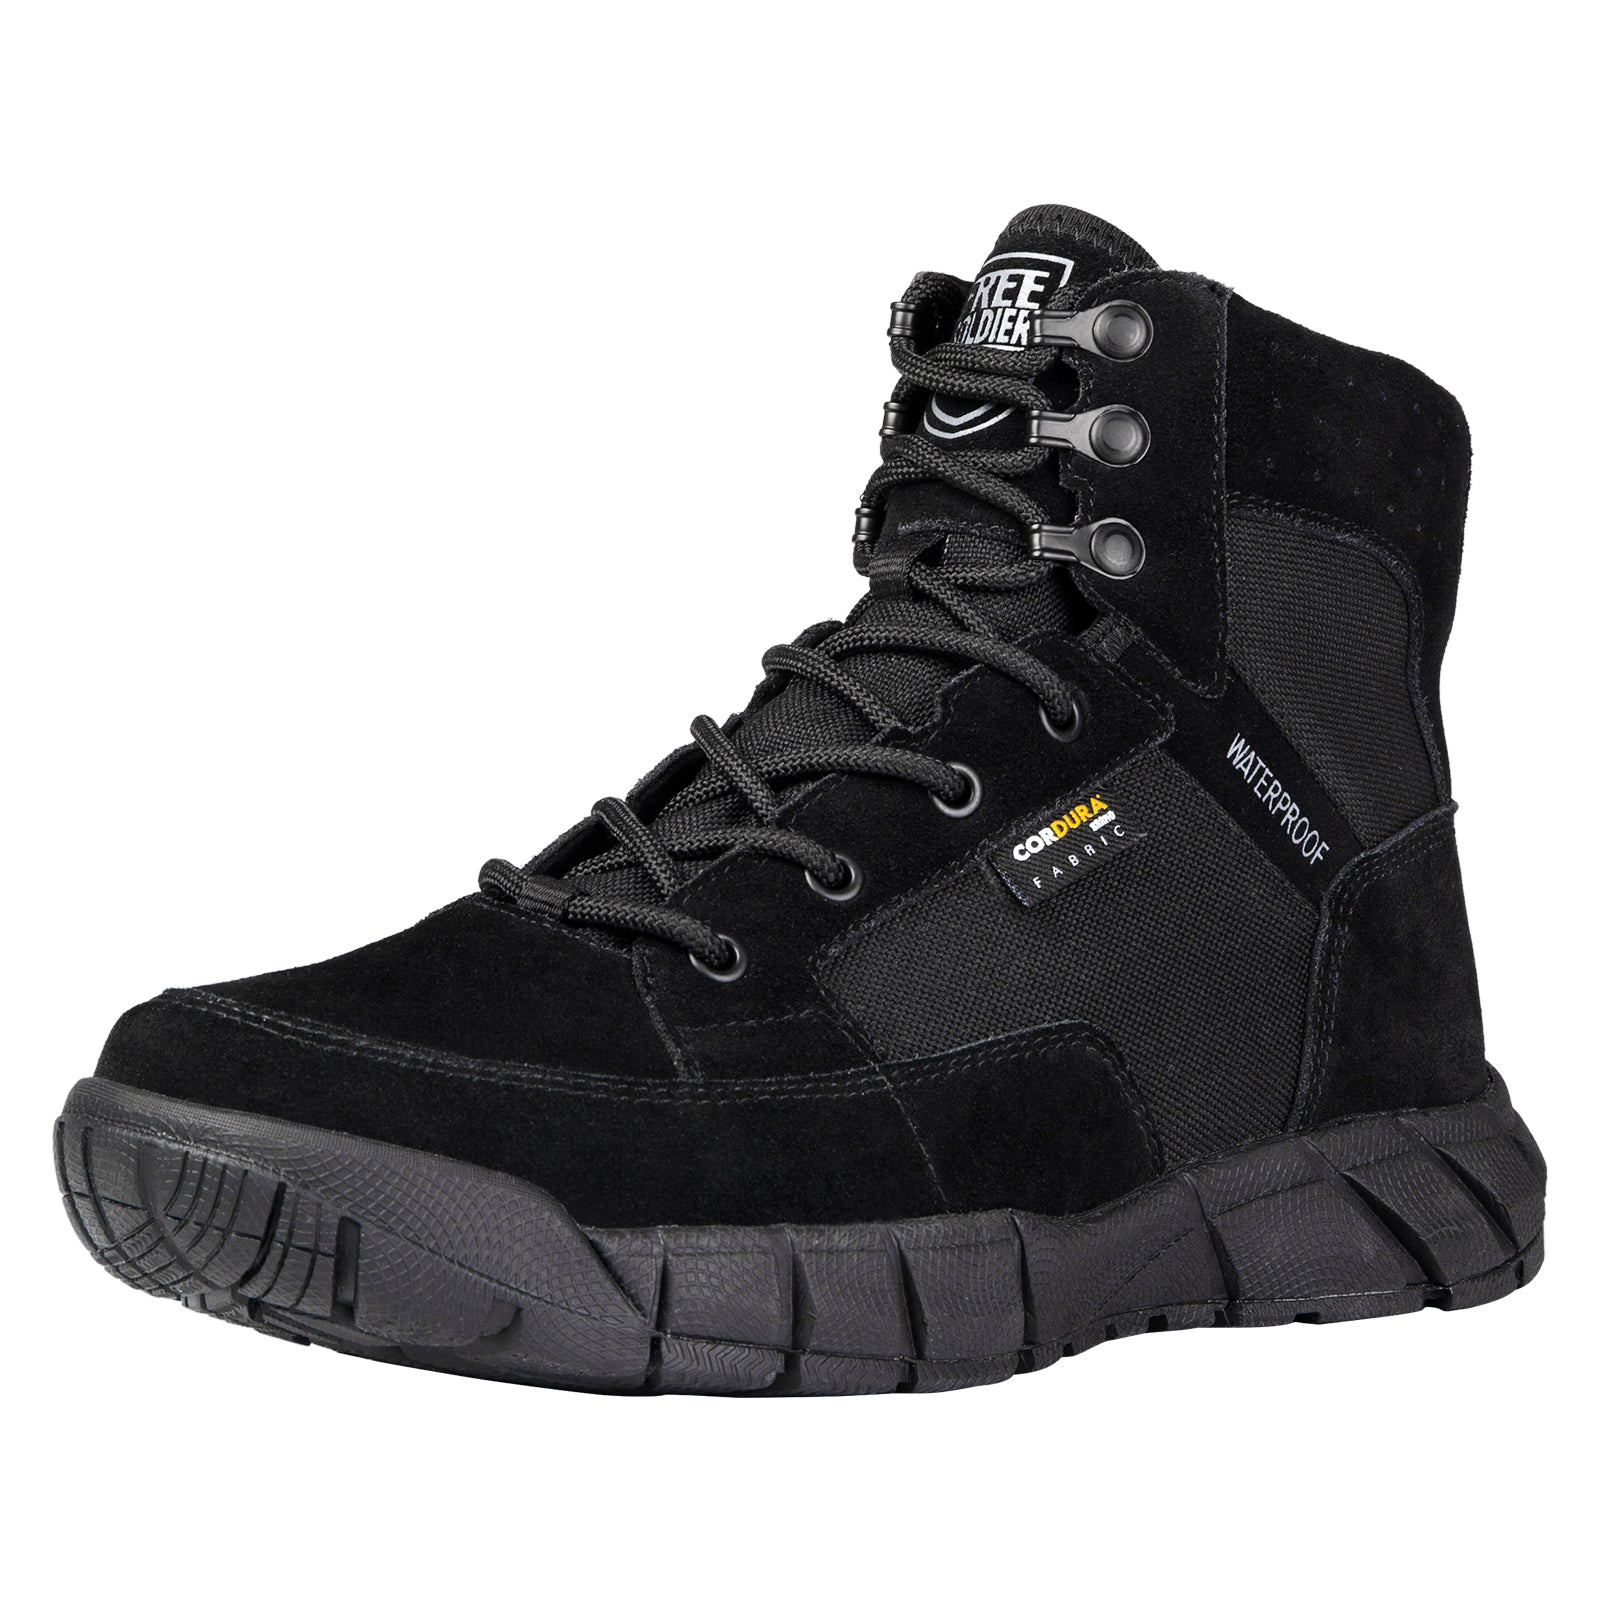 6-Inch Men's Tactical Waterproof Hiking Boots